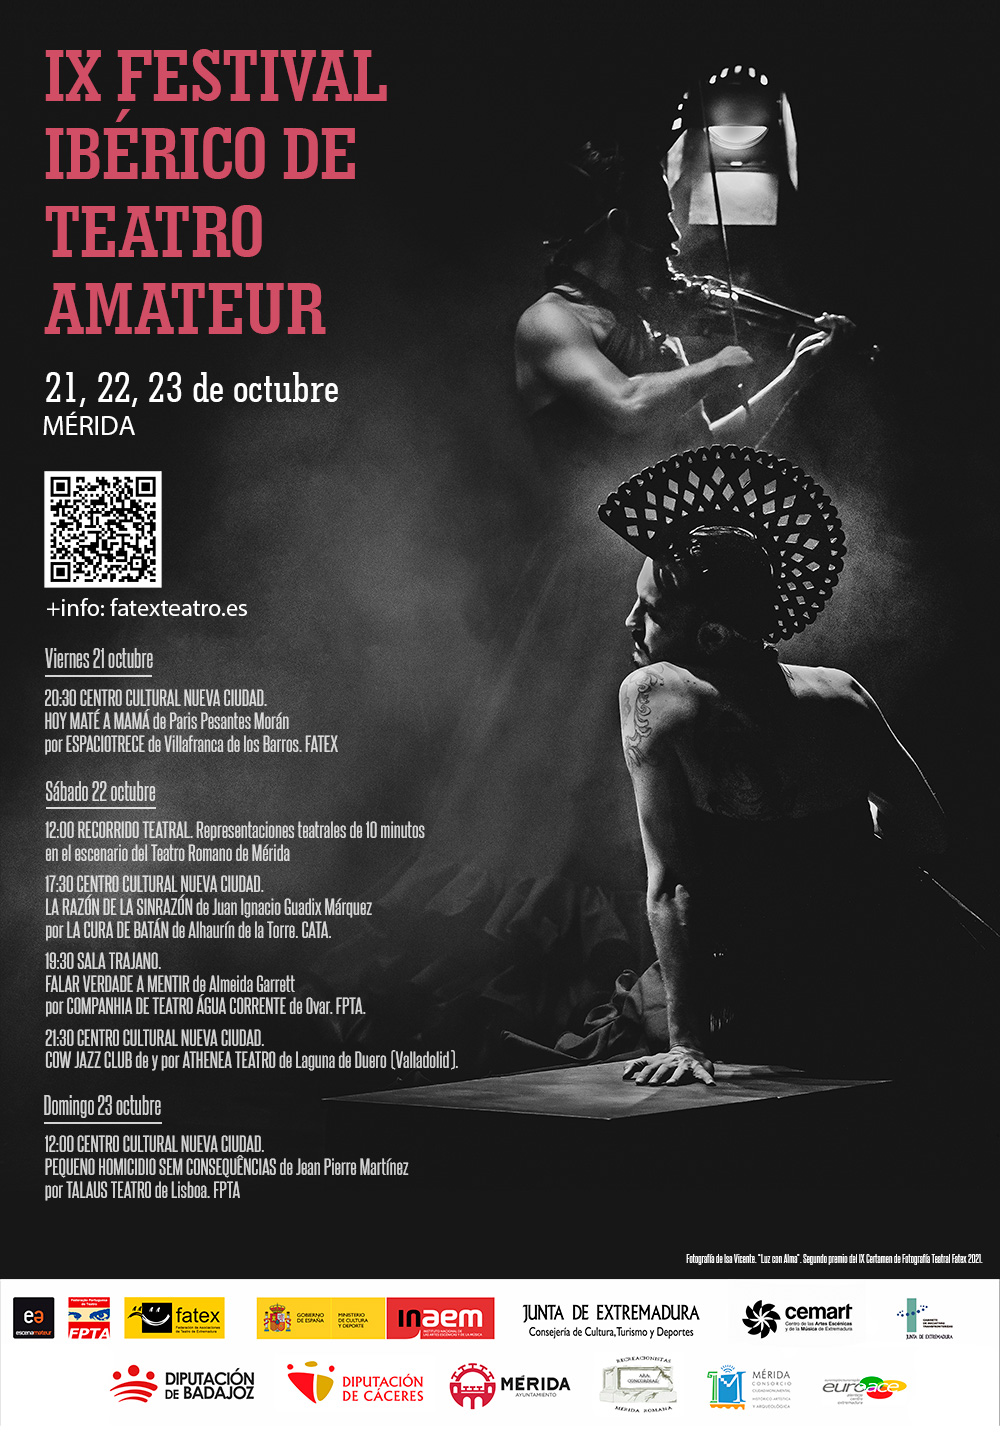 Cartel del IX Festival de Teatro Ibérico Amateur